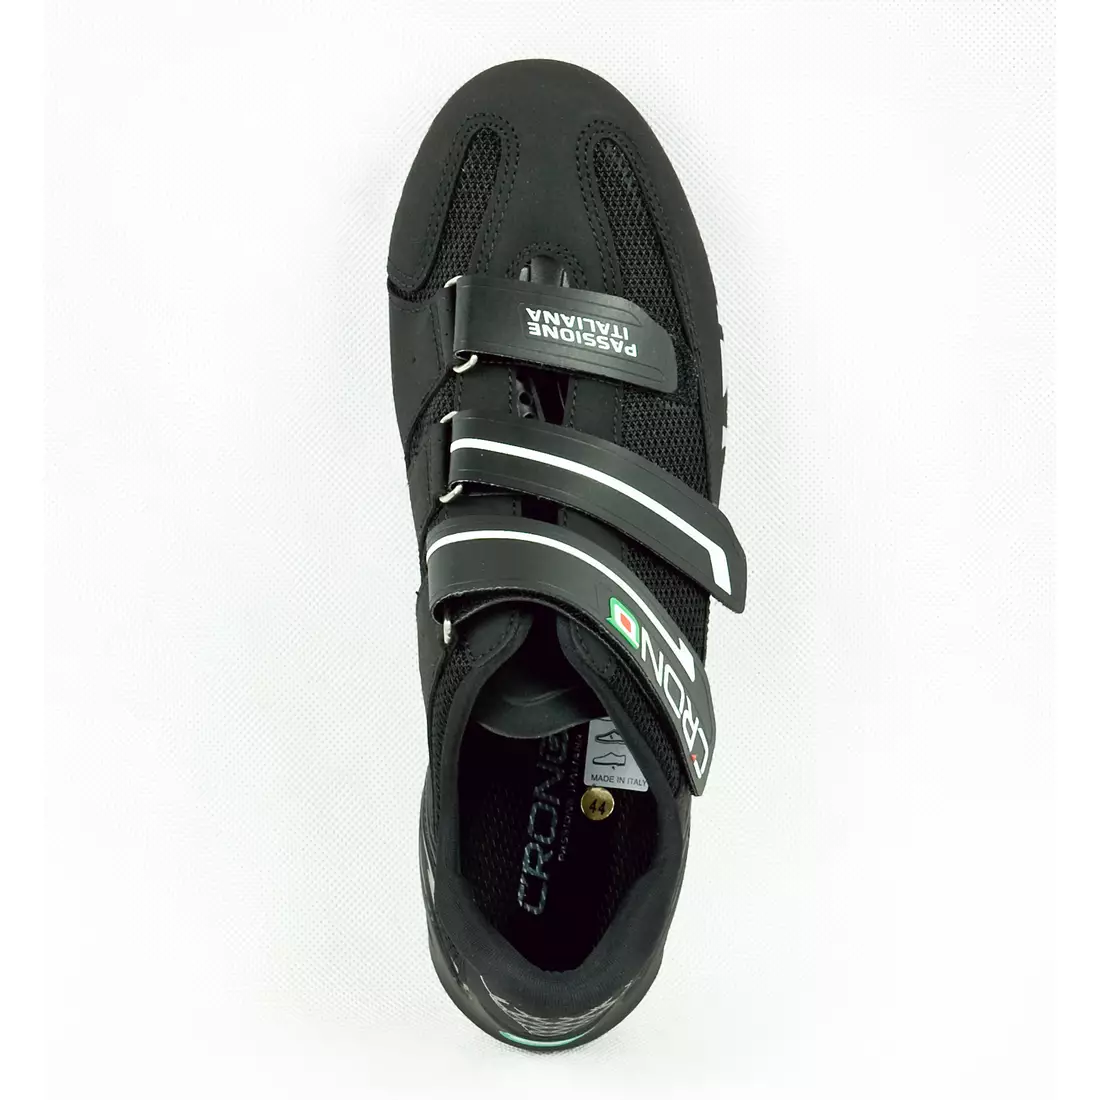 CRONO PERLA NYLON - pantofi de ciclism rutier - culoare: Negru